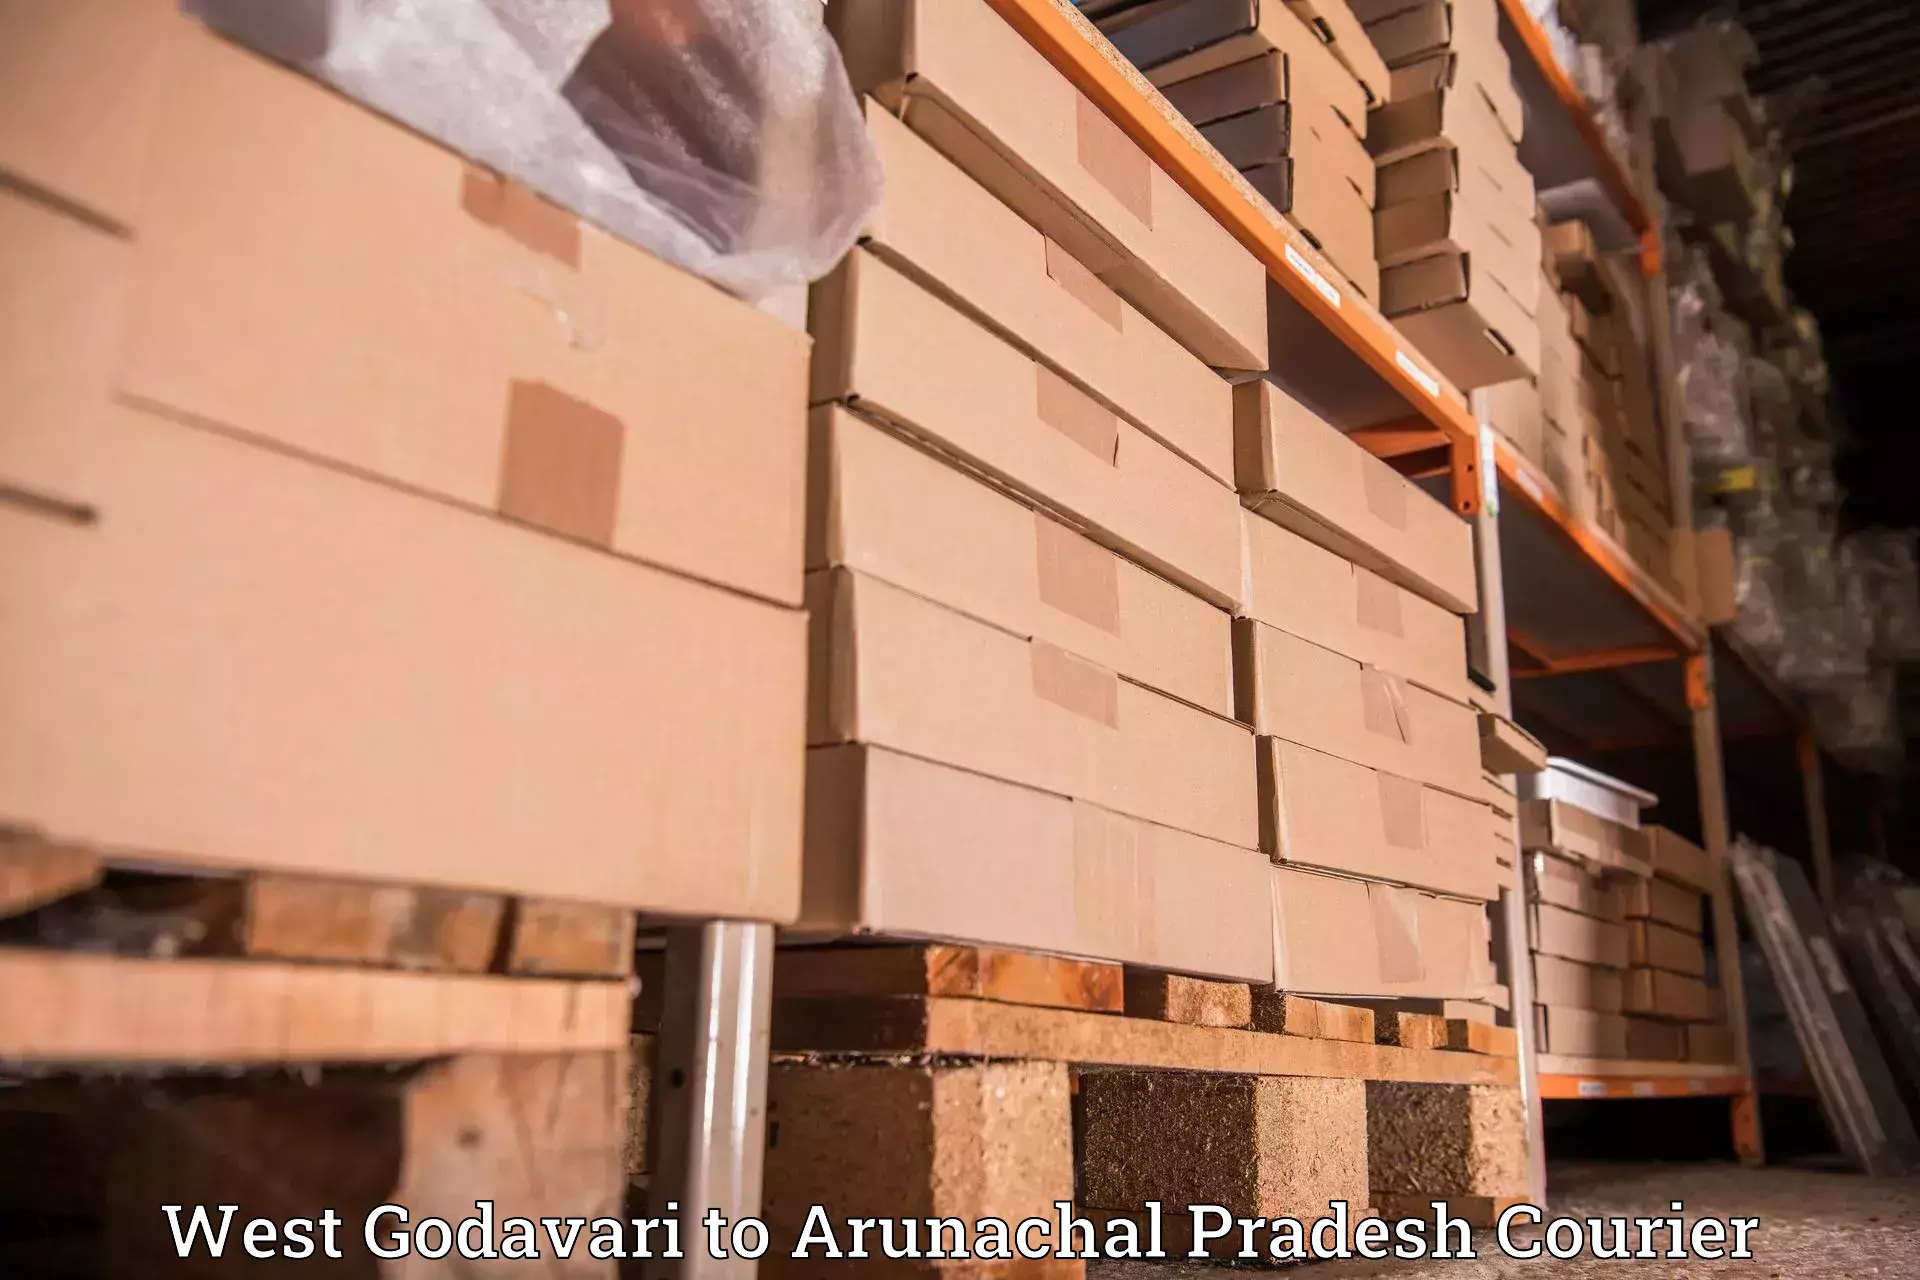 Courier service innovation West Godavari to Papum Pare